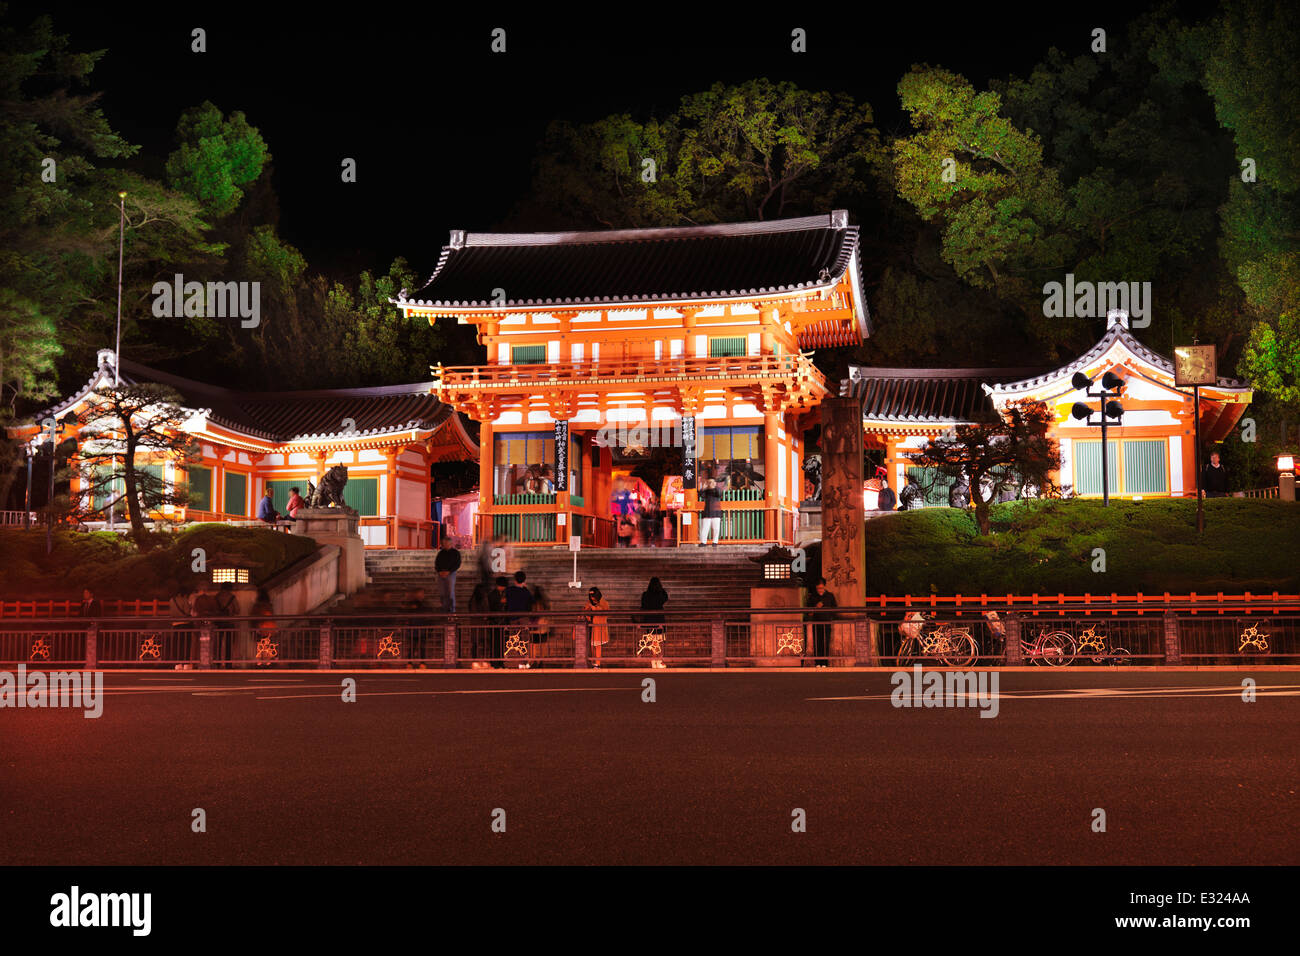 Main gate of the Yasaka shrine at night in Gion, Kyoto, Japan 2014 Stock Photo